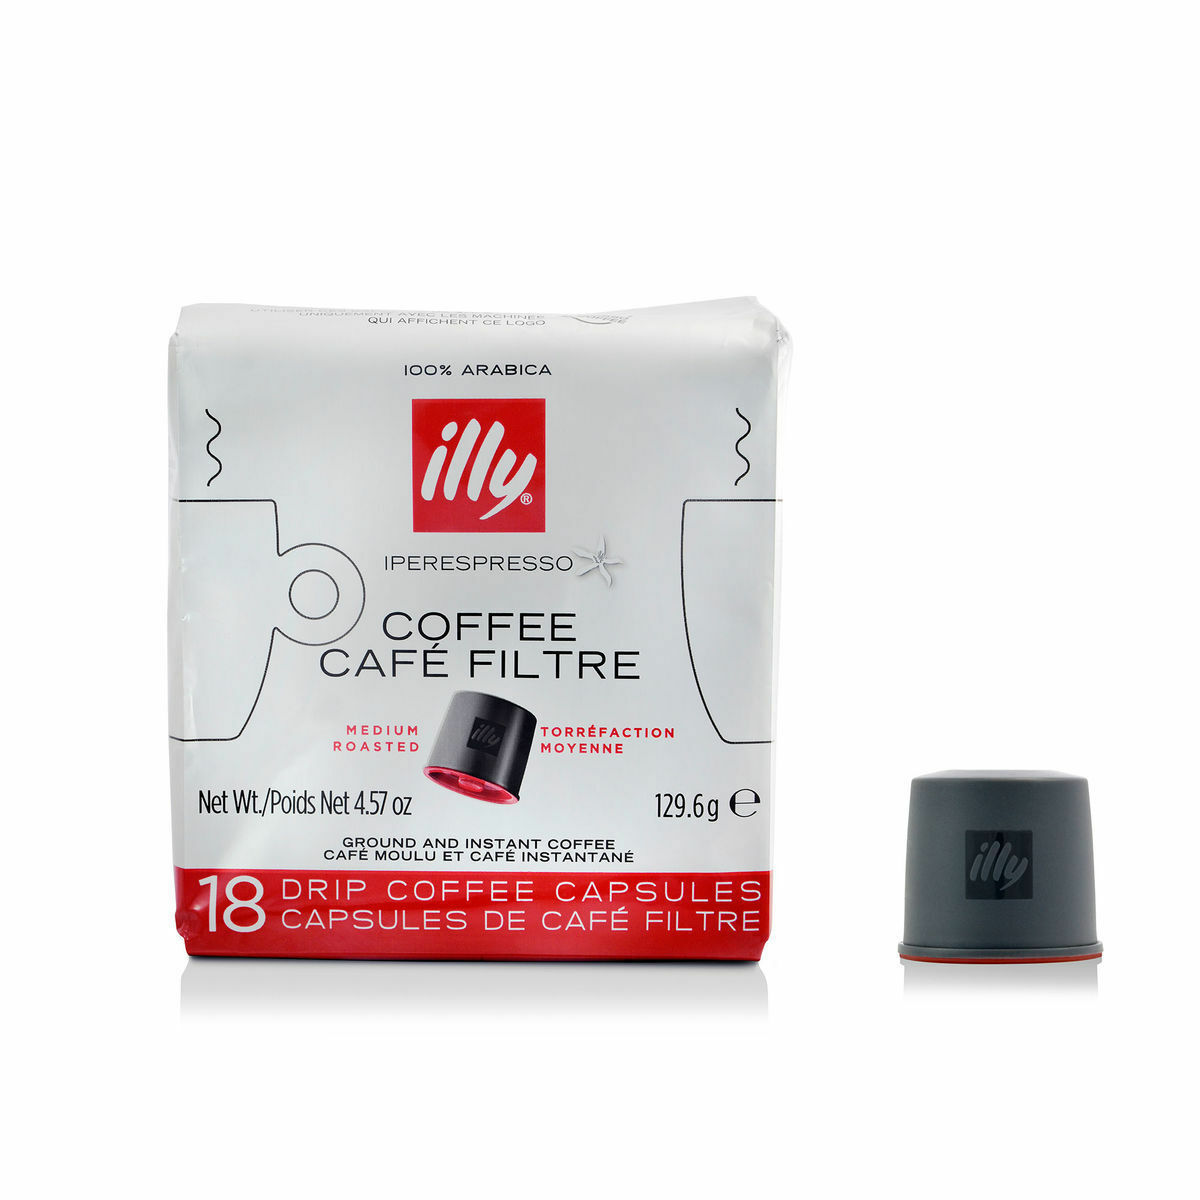 Illy - iper 18 Coffee Capsule Cube Medium Roast - $24.95